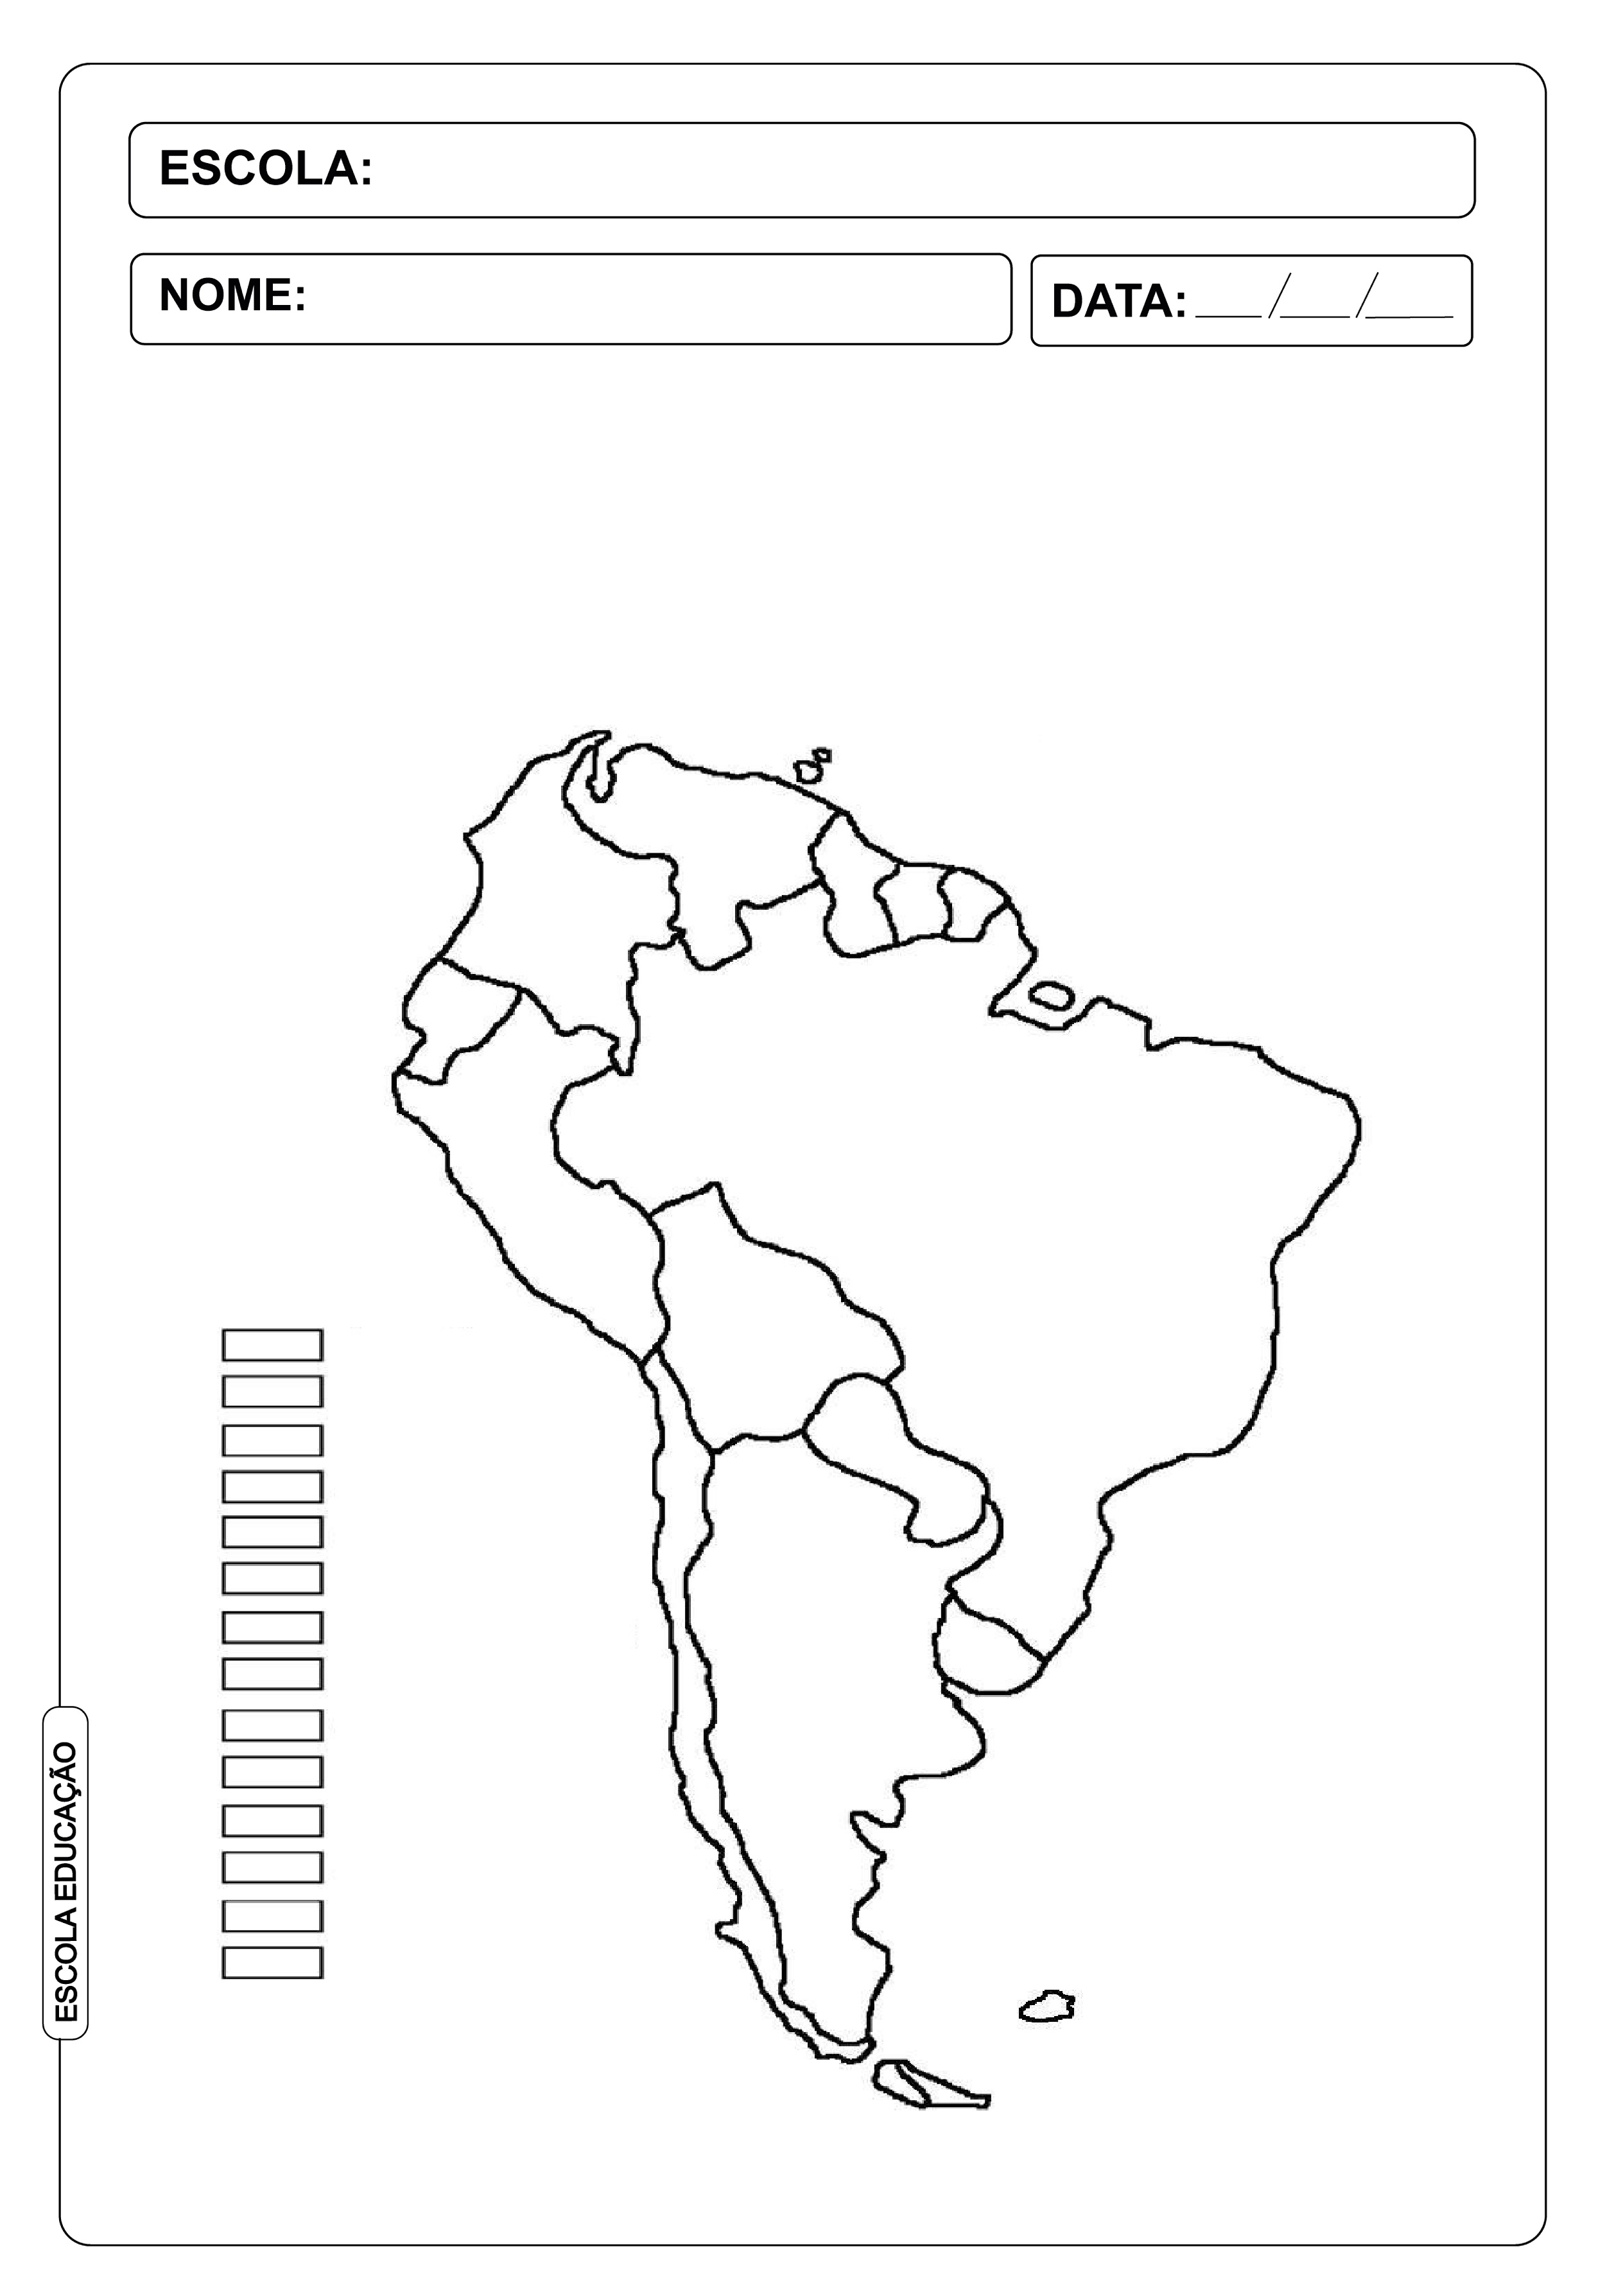 6 Mapas Do Brasil Para Colorir E Imprimir Escola Educacao